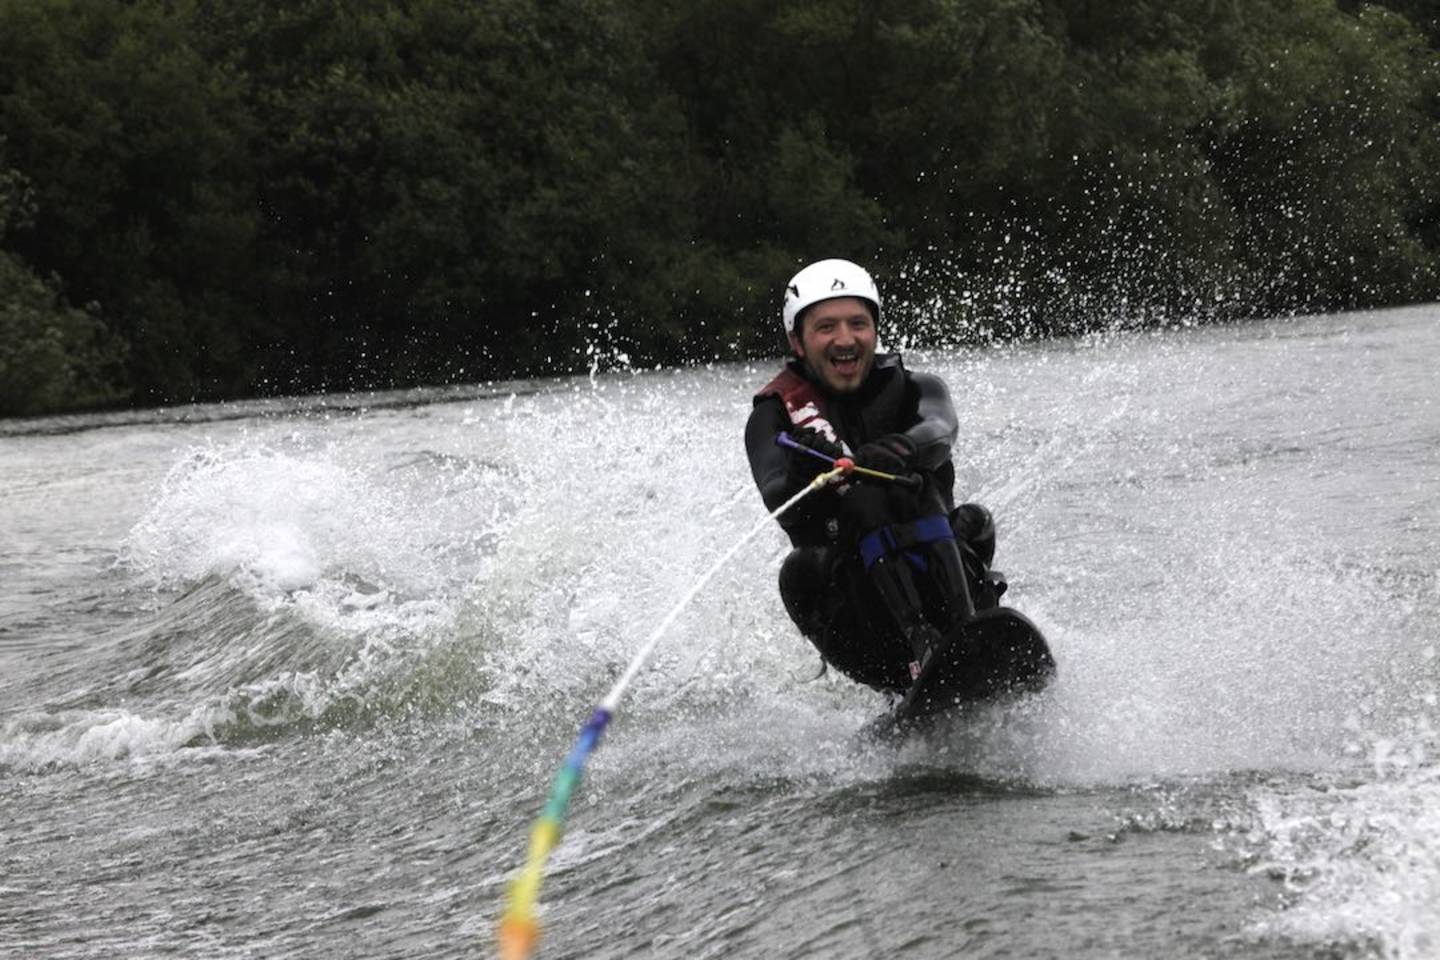 Mike Payne, water skiing